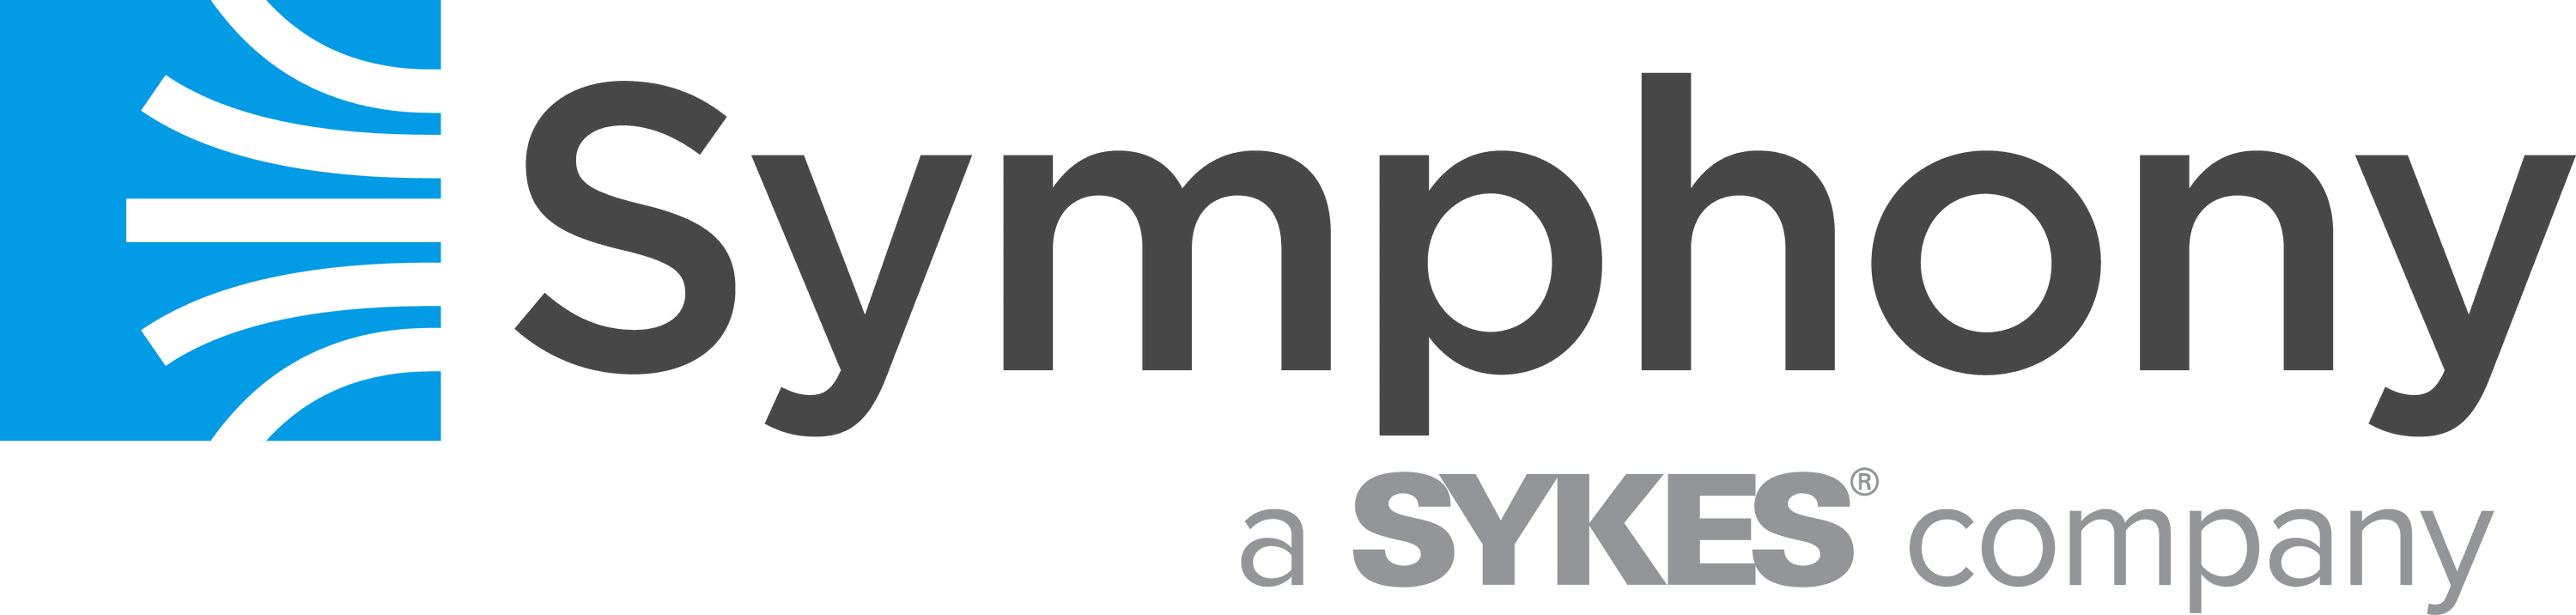 SYKES-Logos-Symphony-RGB-color